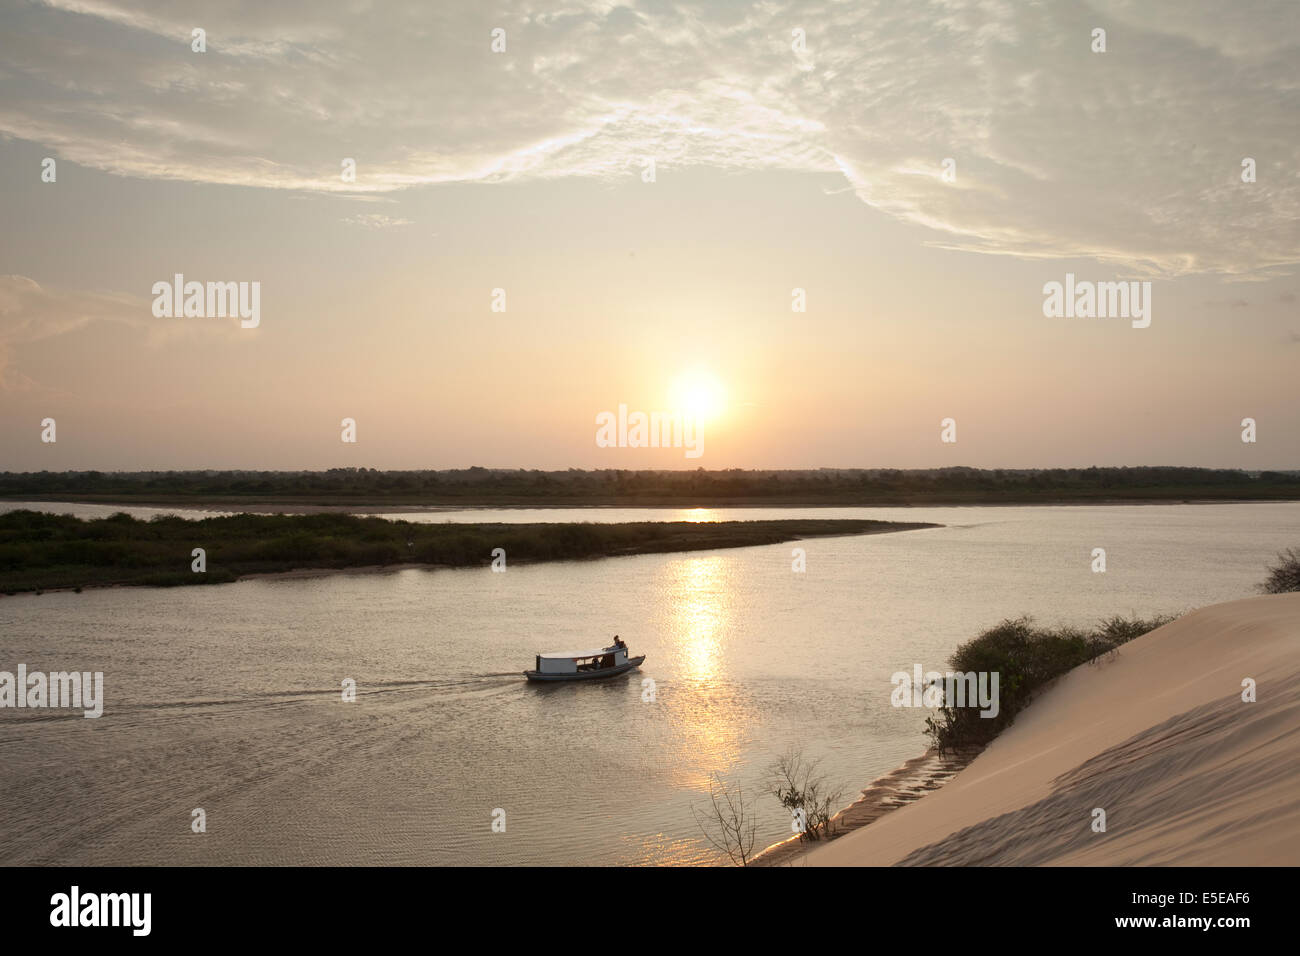 A boat on the Delta do Parnaiba wetlands at sunset, Piaui Stock Photo